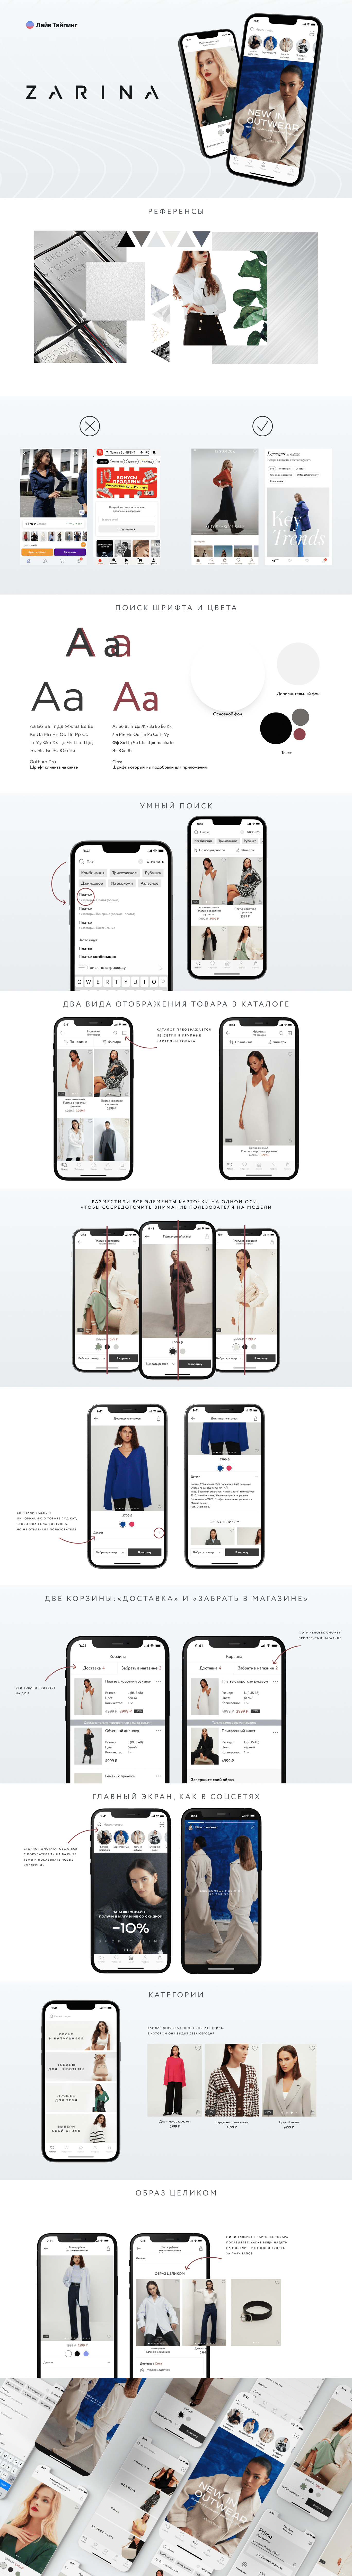 Zarina — одежда и аксессуары модного бренда